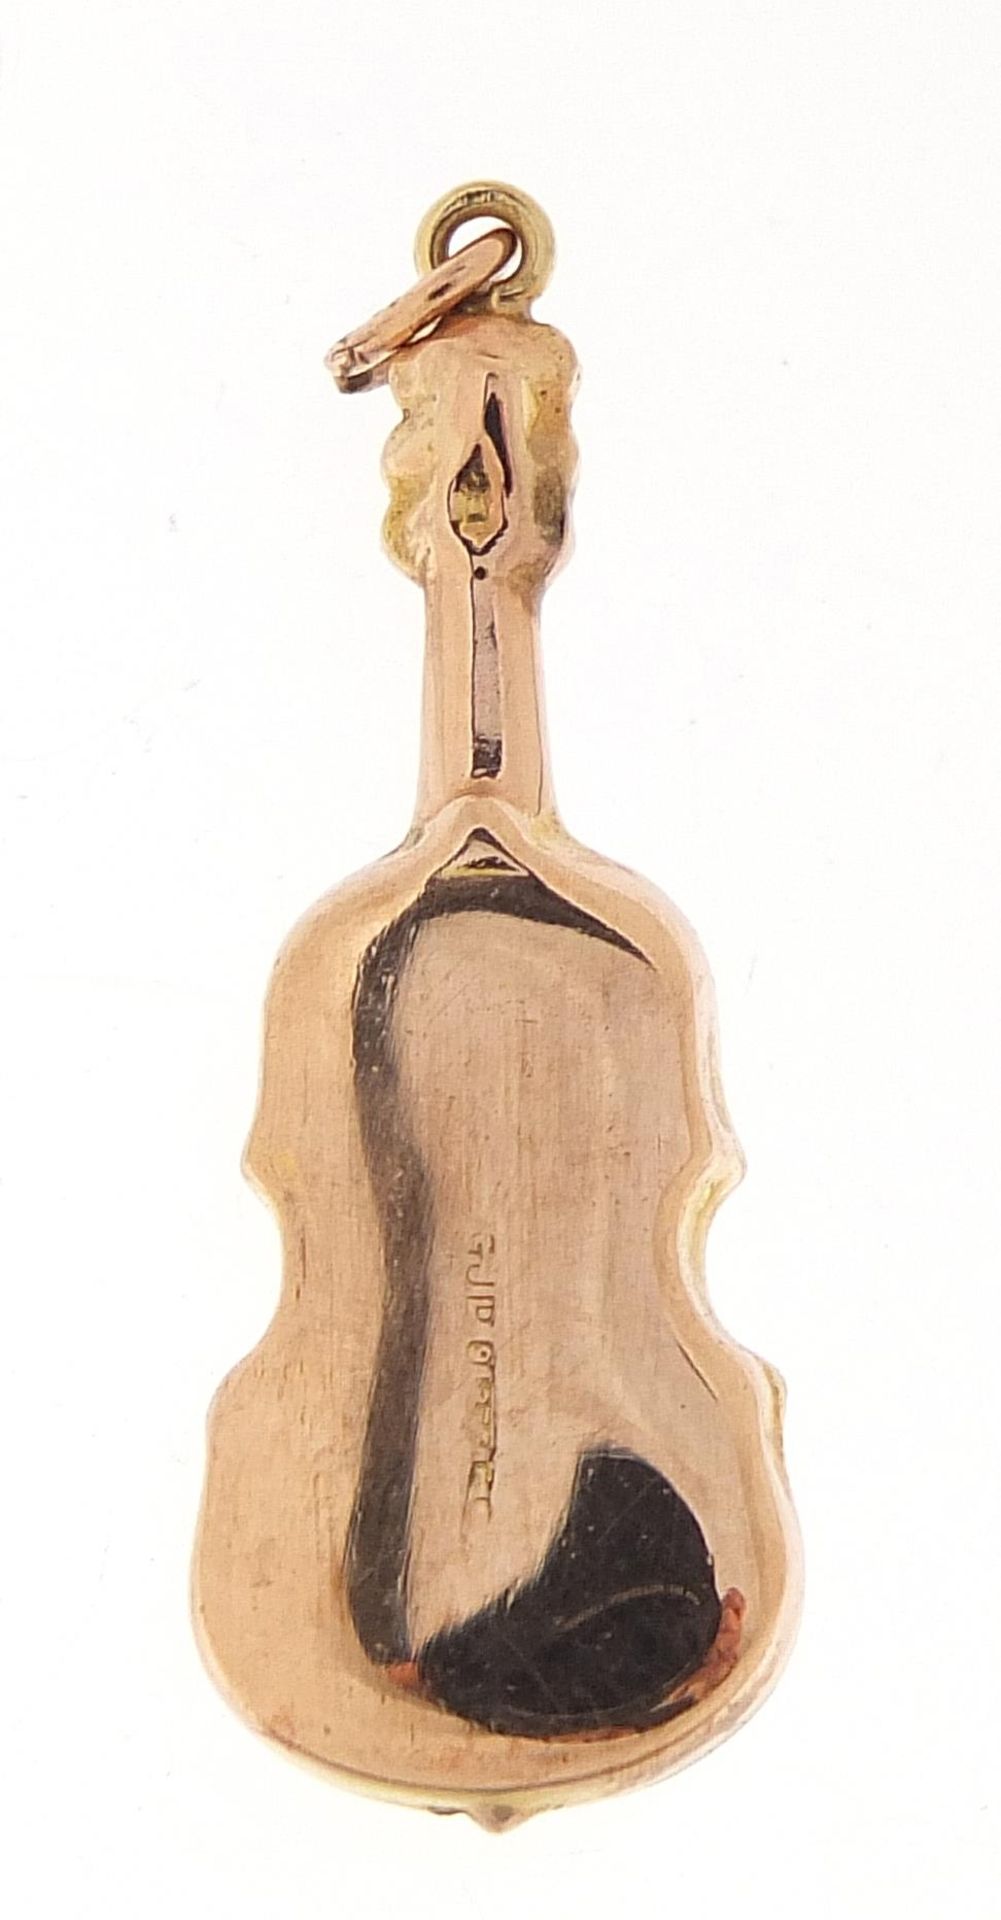 9ct rose gold violin charm, 3cm high, 1.8g - Image 2 of 3